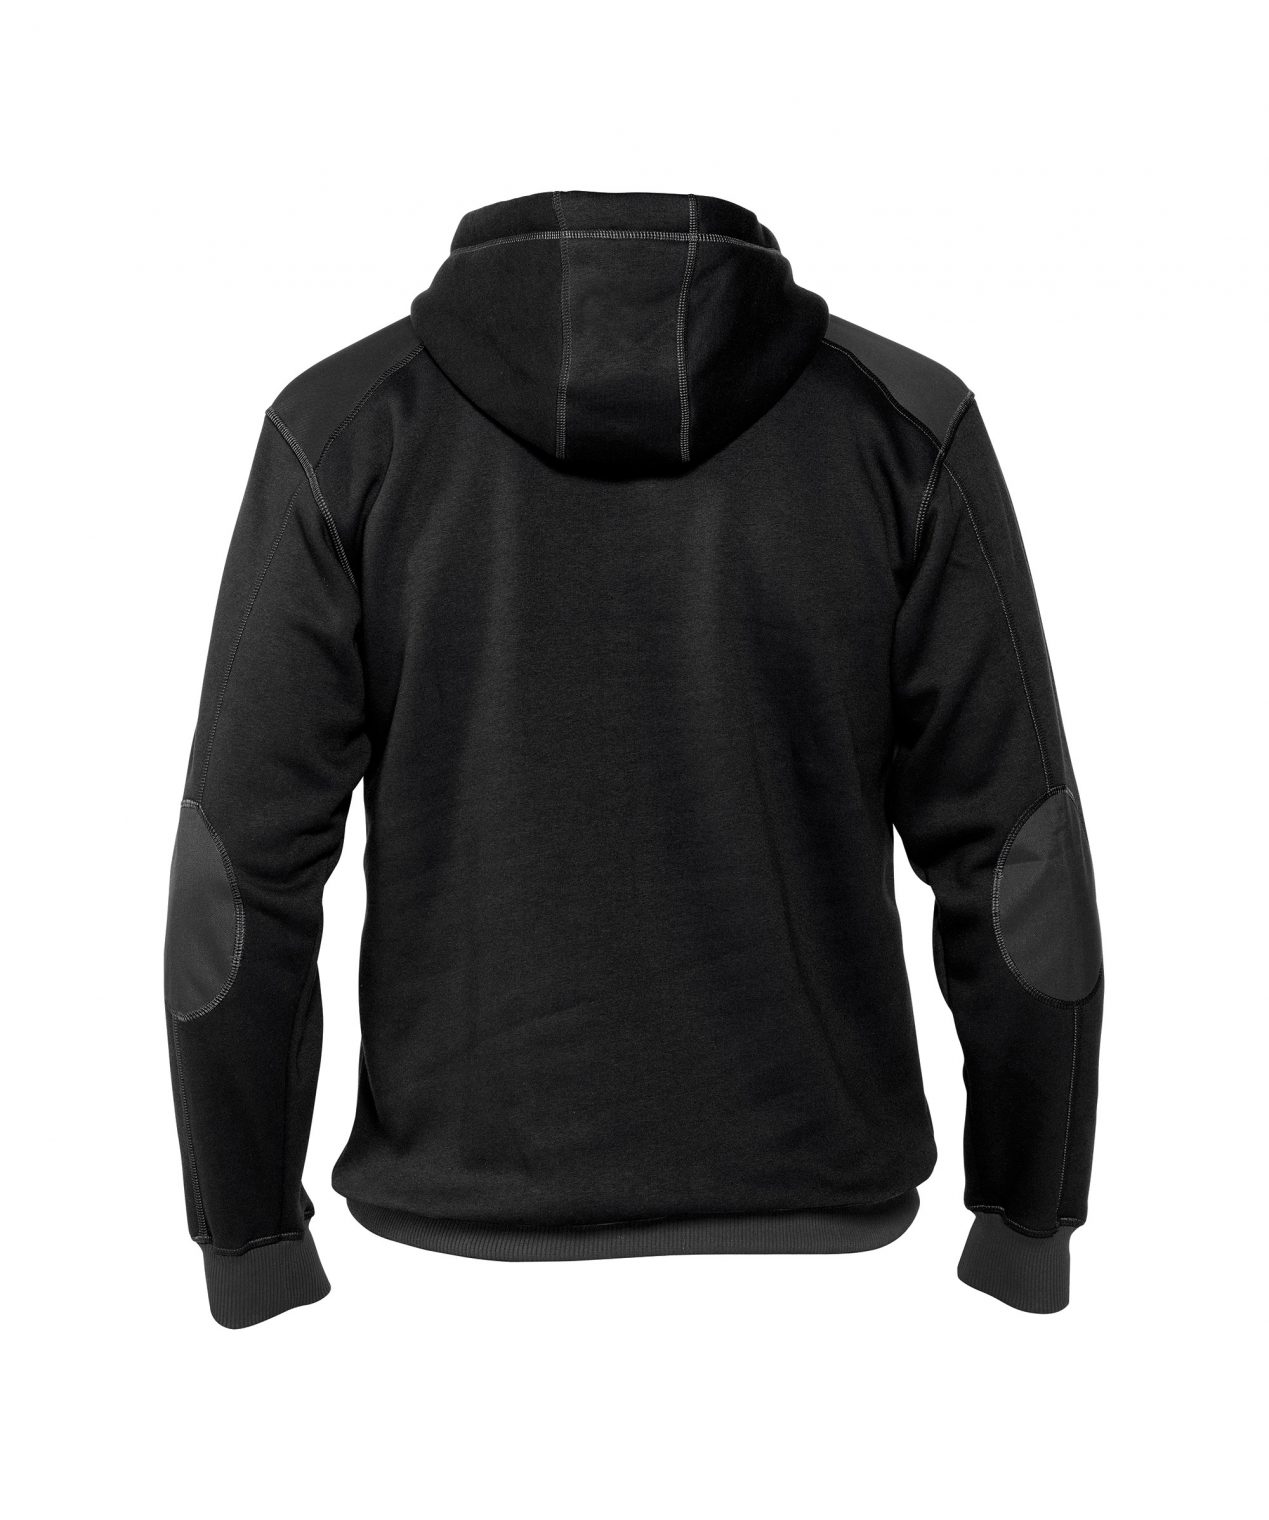 indy hooded sweatshirt black anthracite grey back